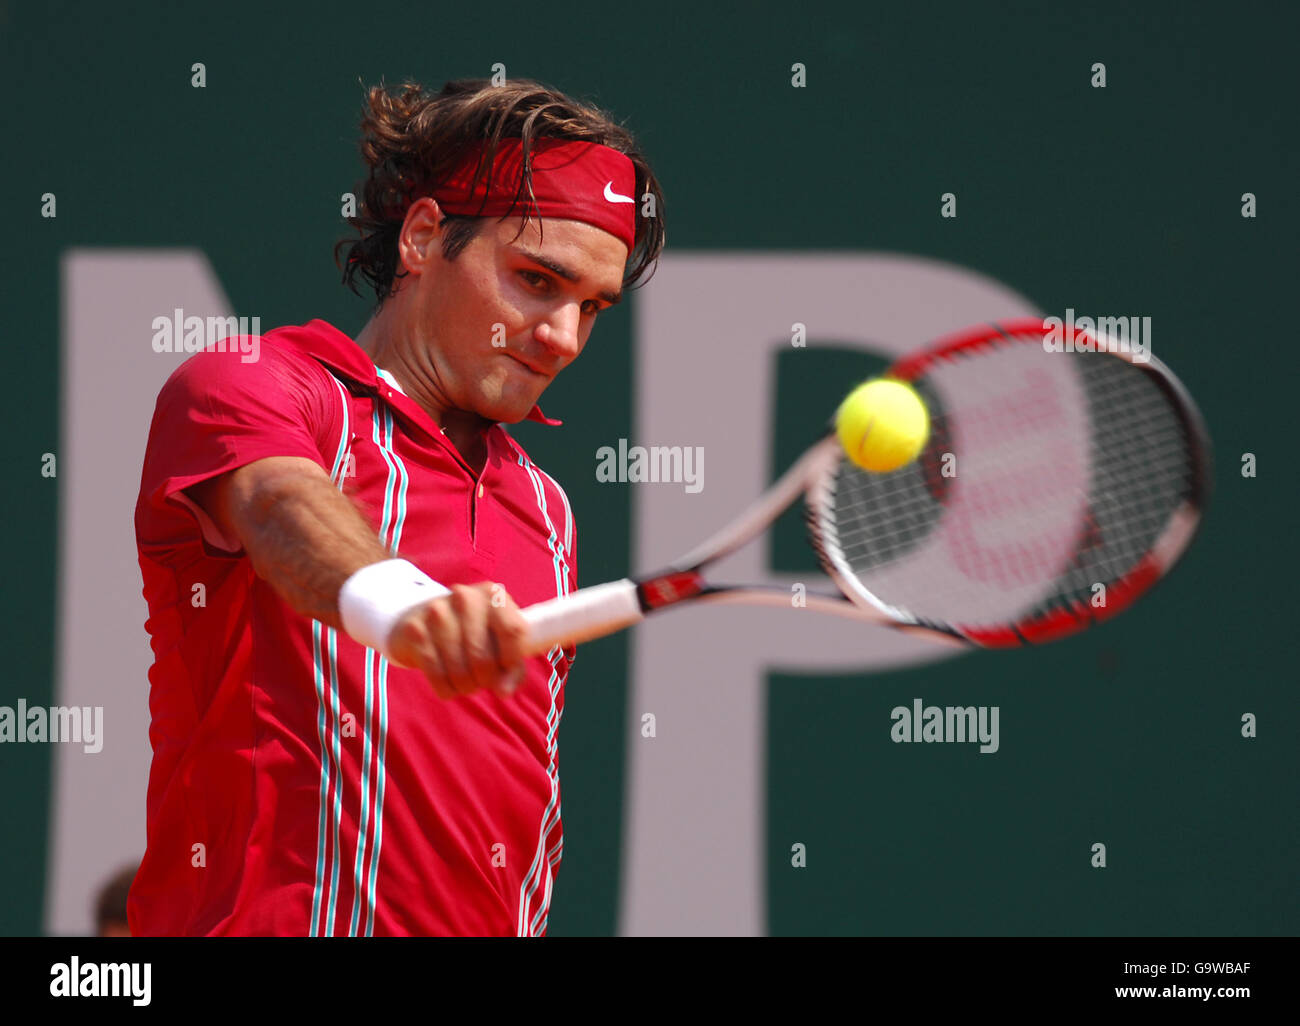 Tennis - ATP Masters Series - Monte Carlo - Halbfinale - Roger Federer gegen Juan Carlos Ferrero. Roger Federer aus der Schweiz Stockfoto